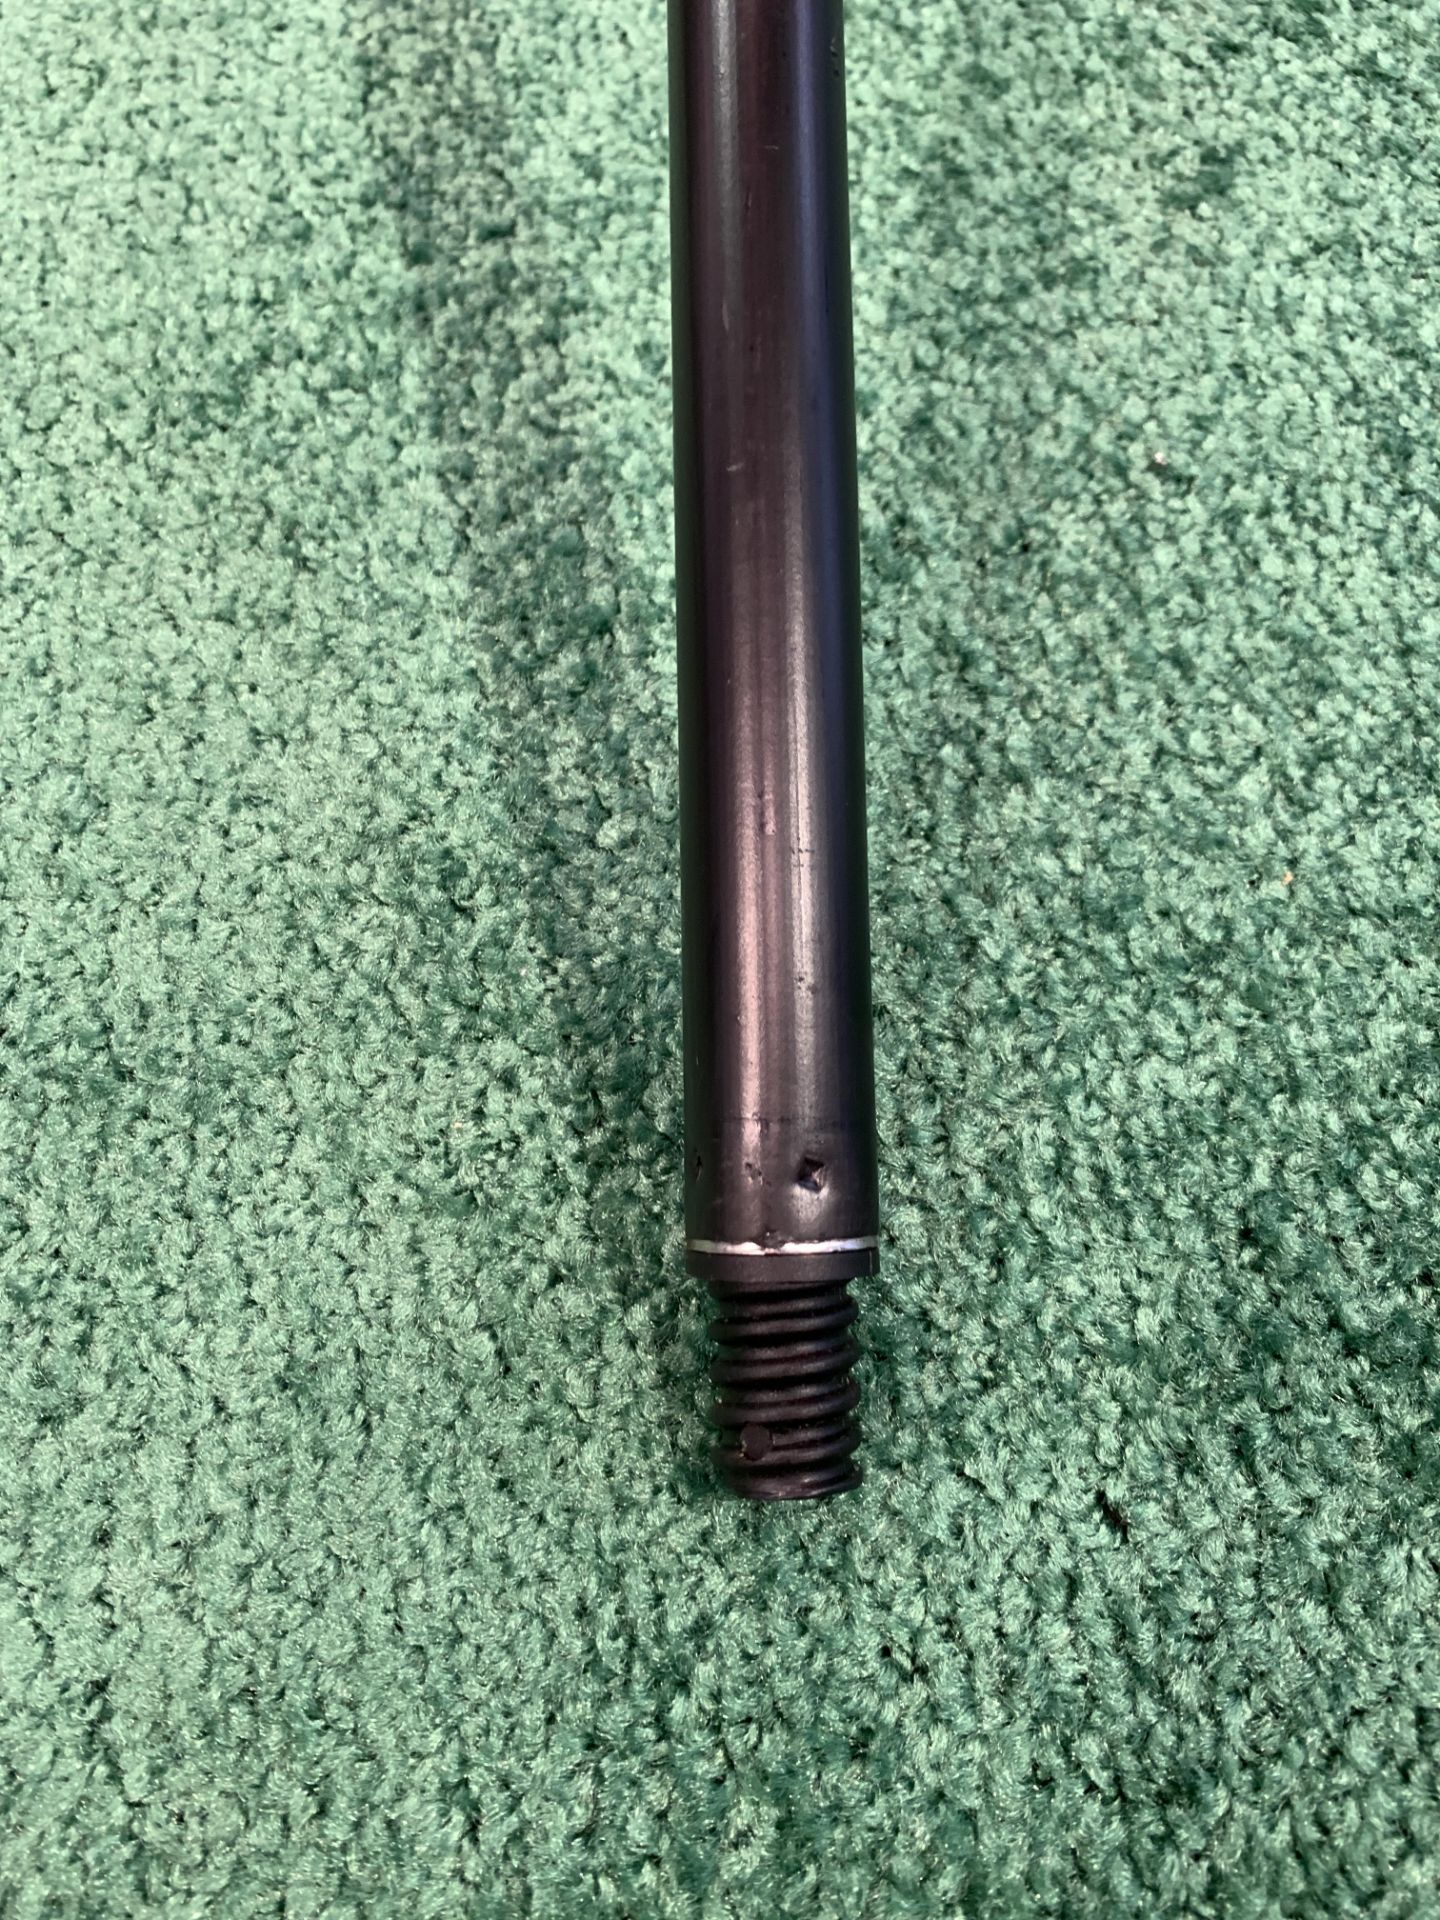 50x NEW Comfort Grip Handles for Rake/Shovel/Garden Tool, Ideal for any Application, 59" Long - Image 2 of 4